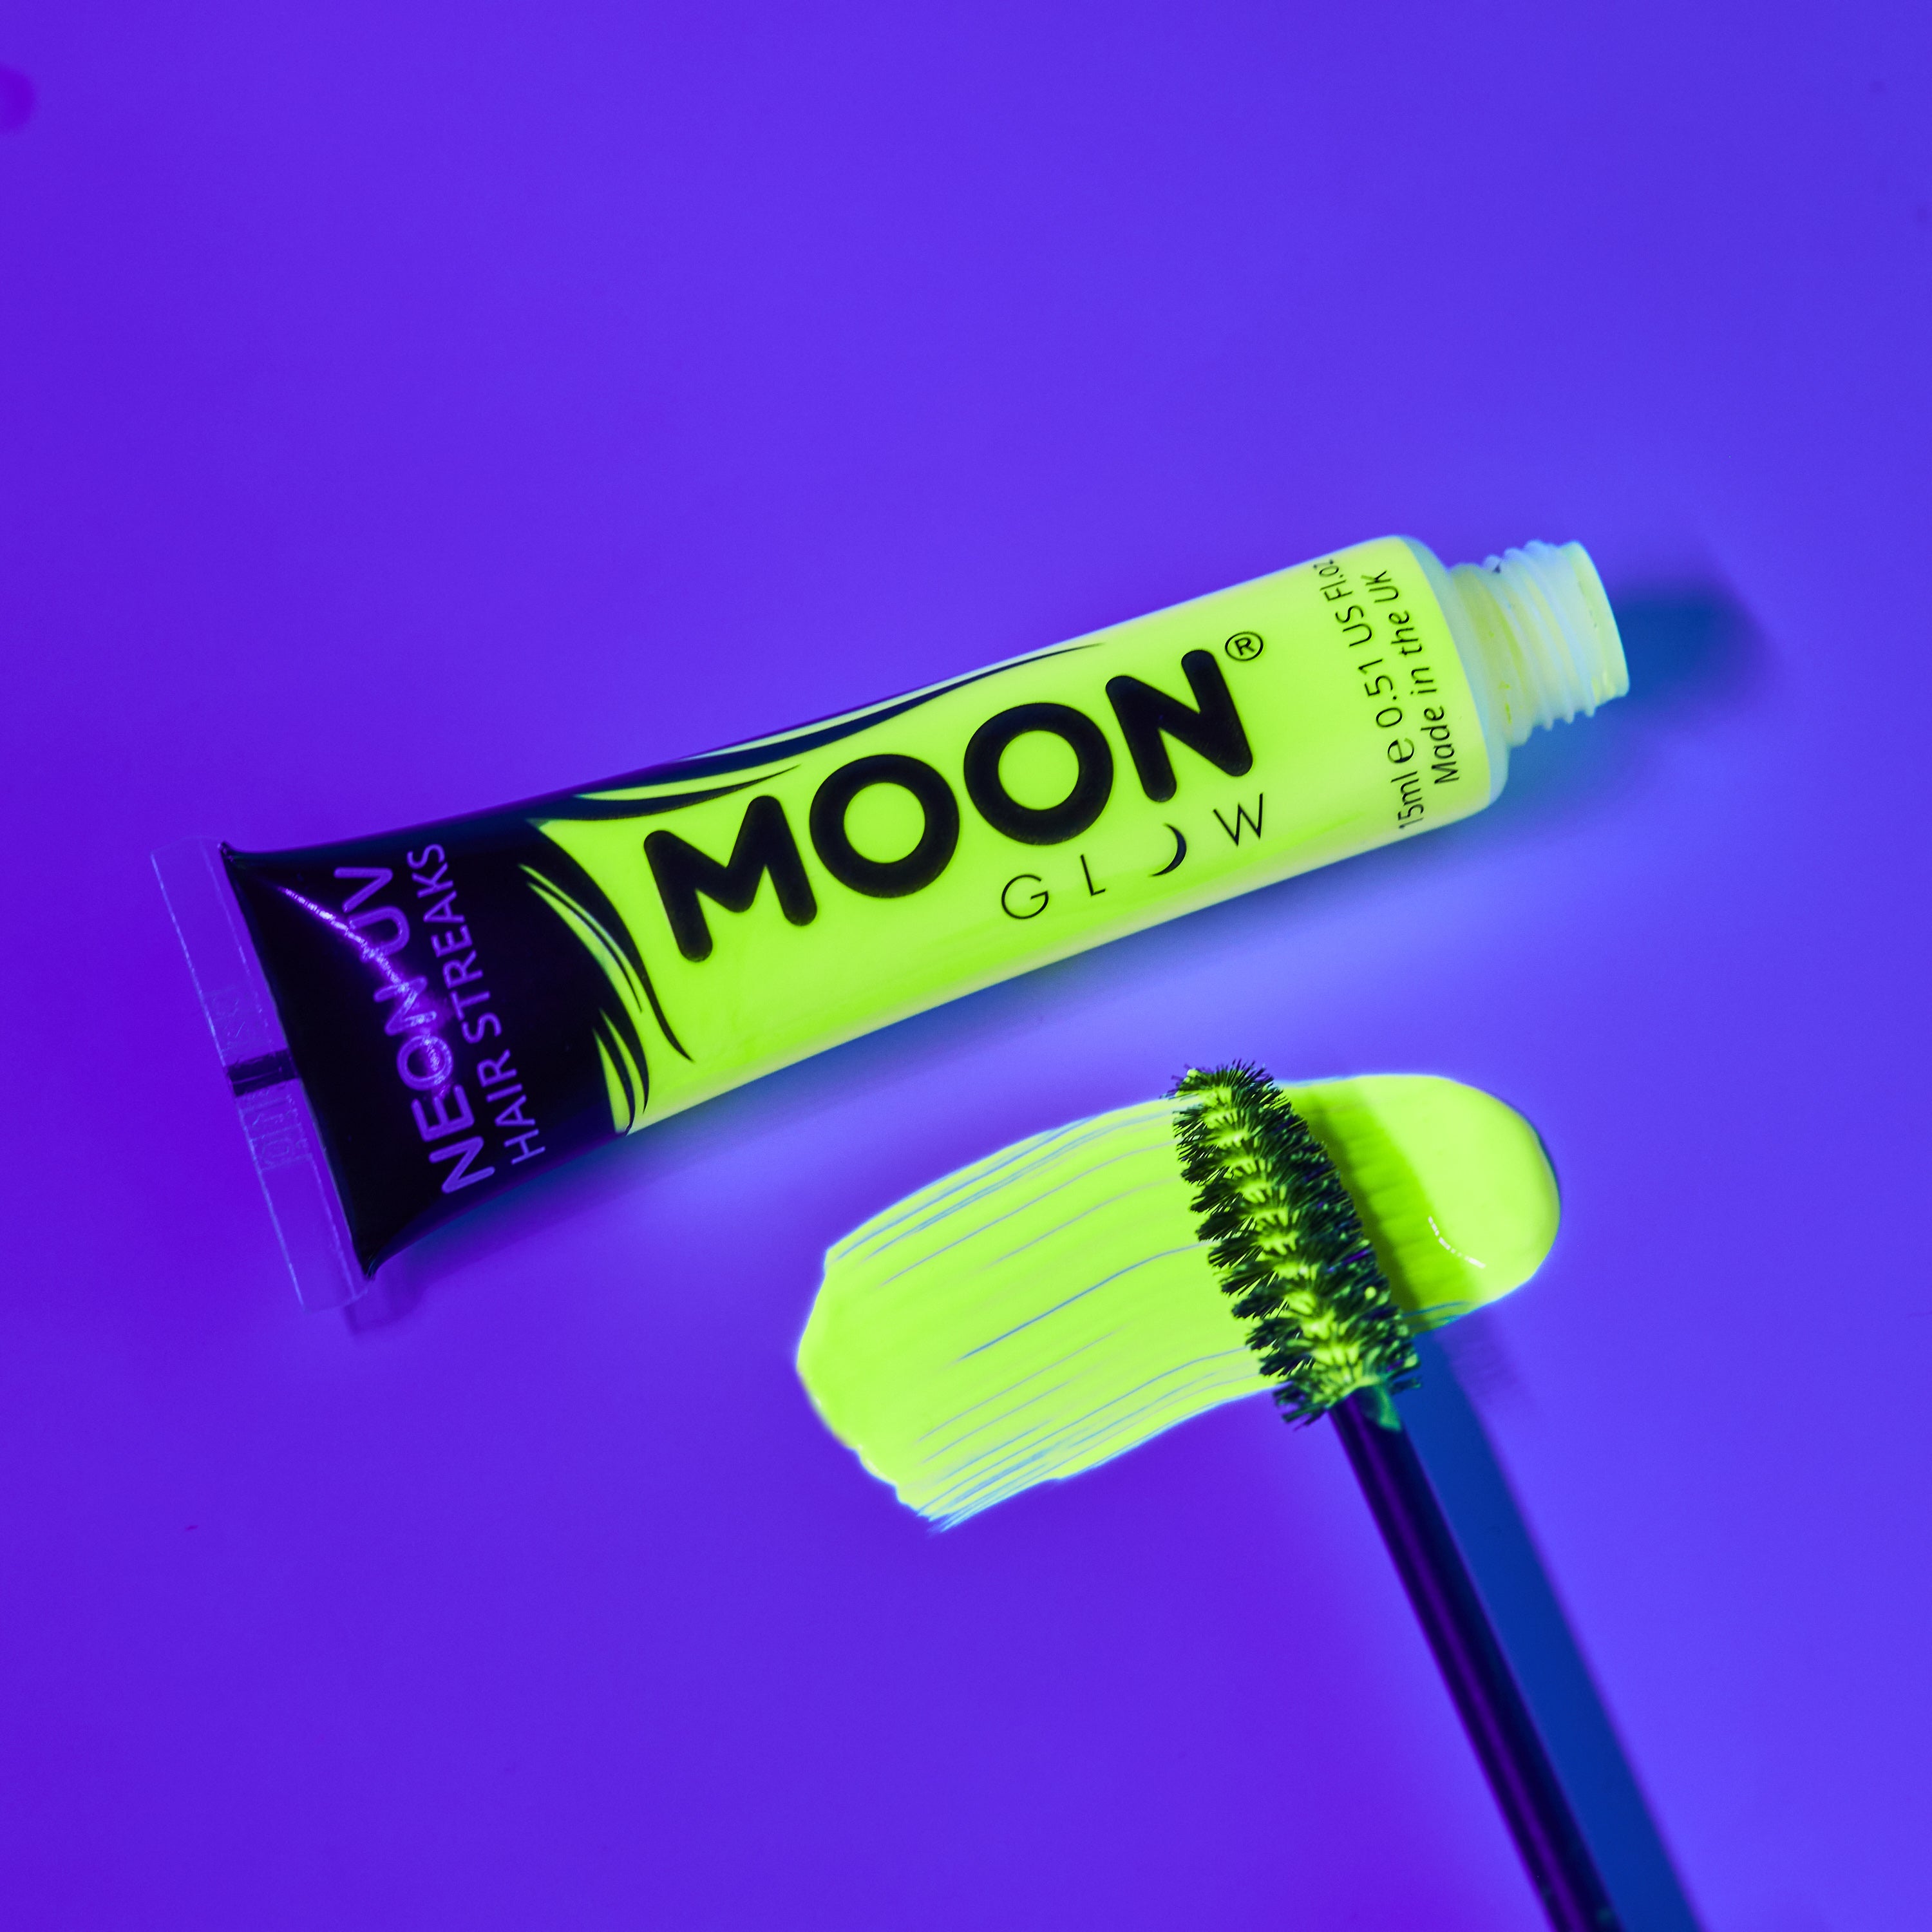 Neon UV Glow Blacklight Hair Streaks. Cosmetically certified, FDA & Health Canada compliant, cruelty free and vegan.